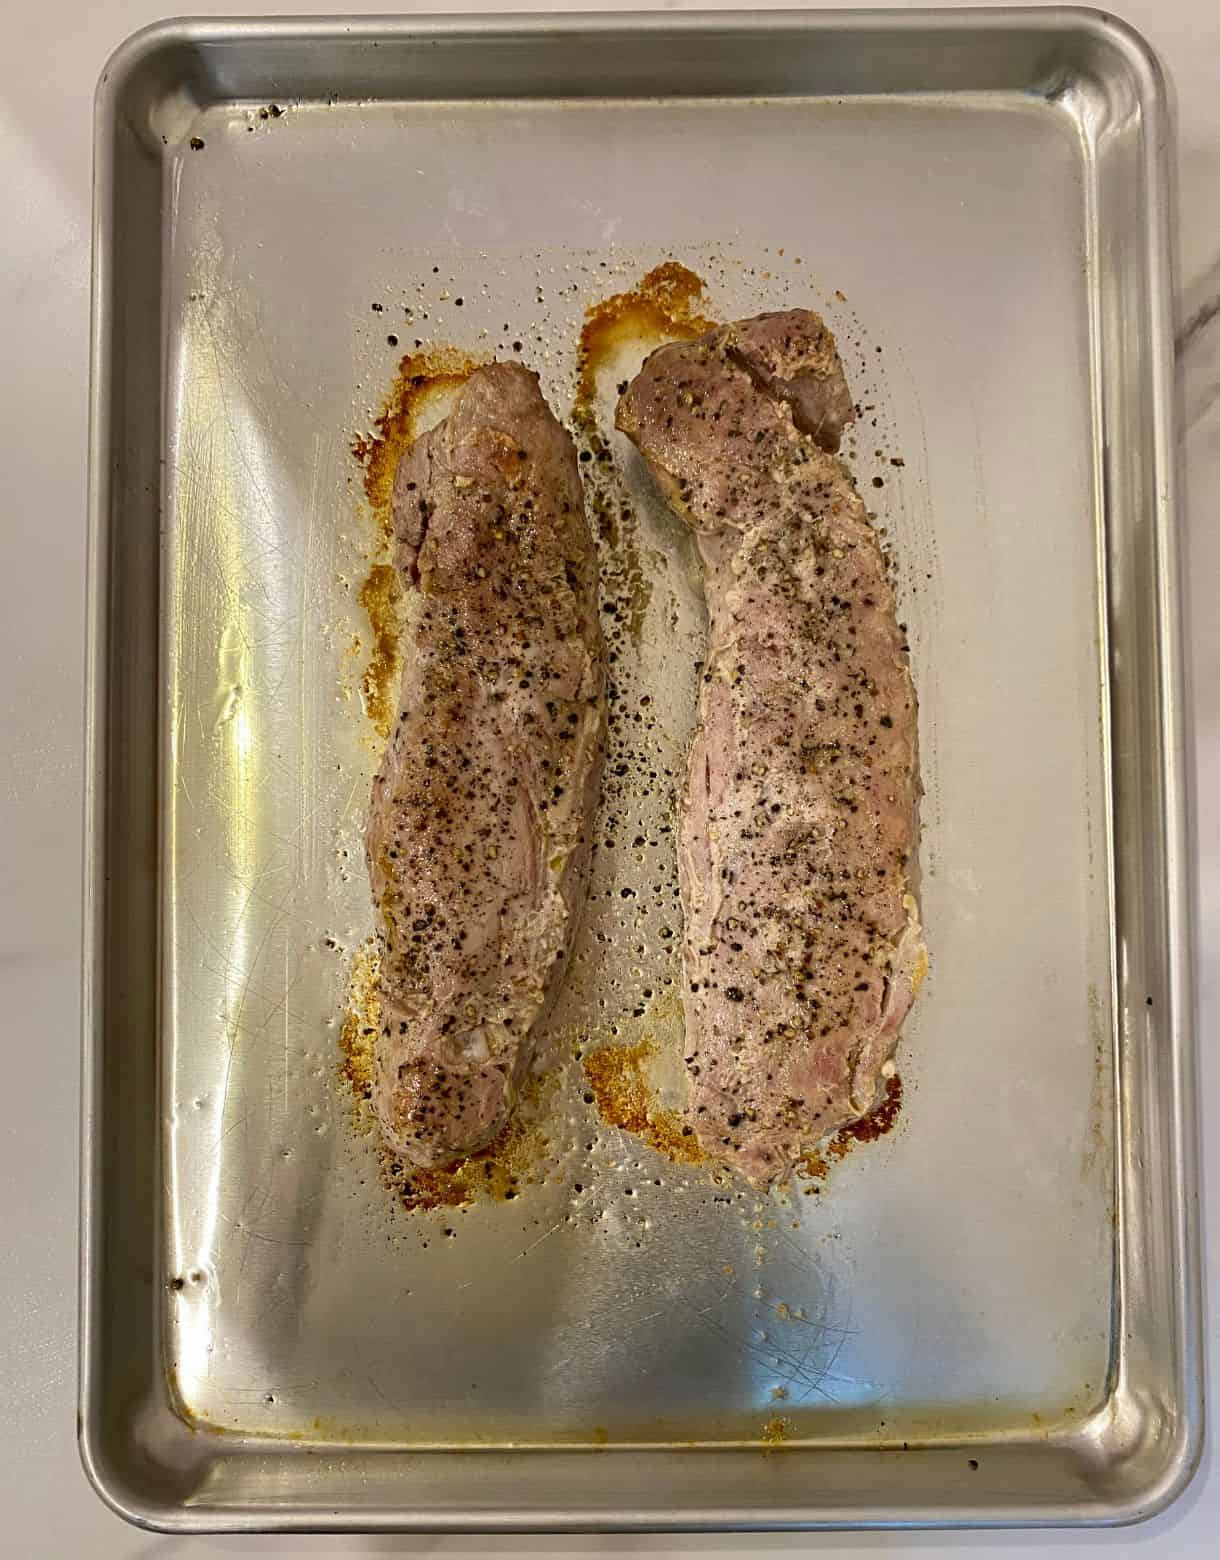 Two cooked pork tenderloins on a sheet pan.